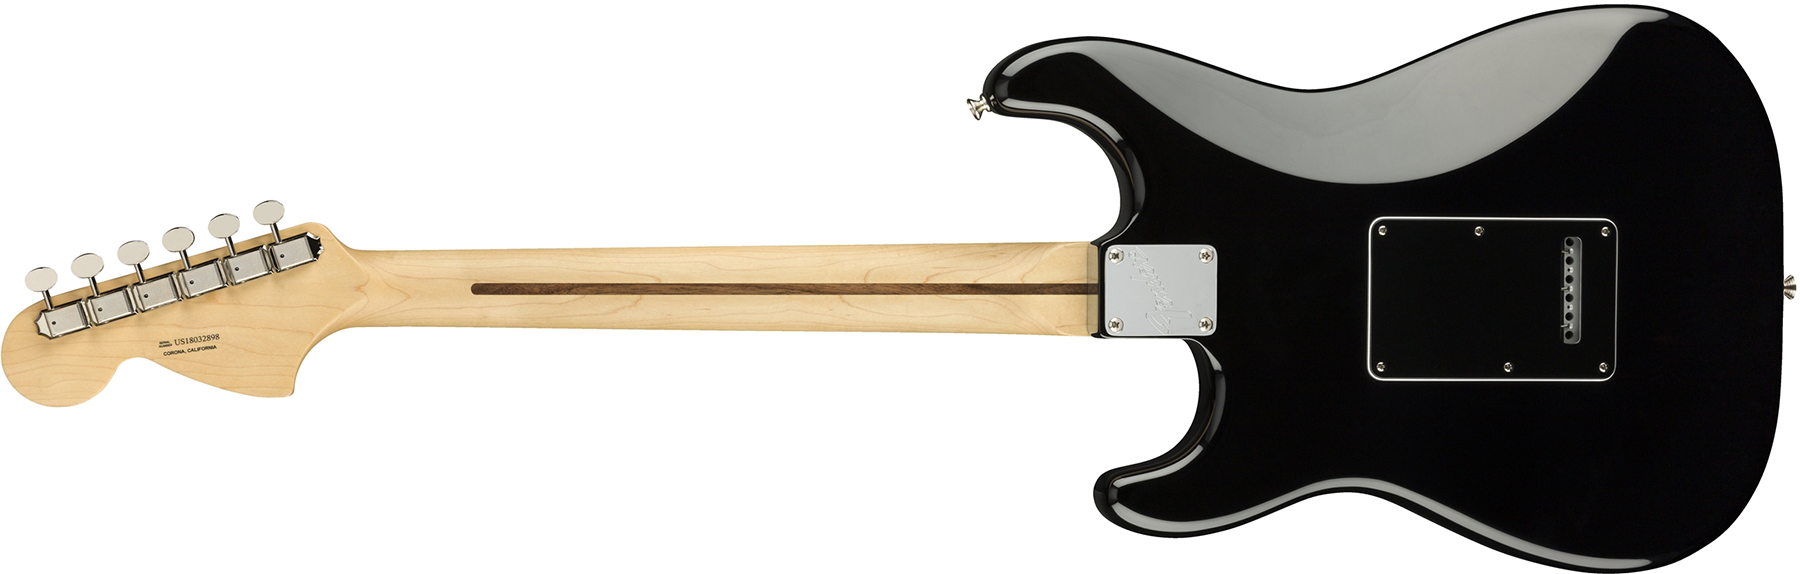 Fender Strat American Performer Usa Hss Mn - Black - Str shape electric guitar - Variation 1